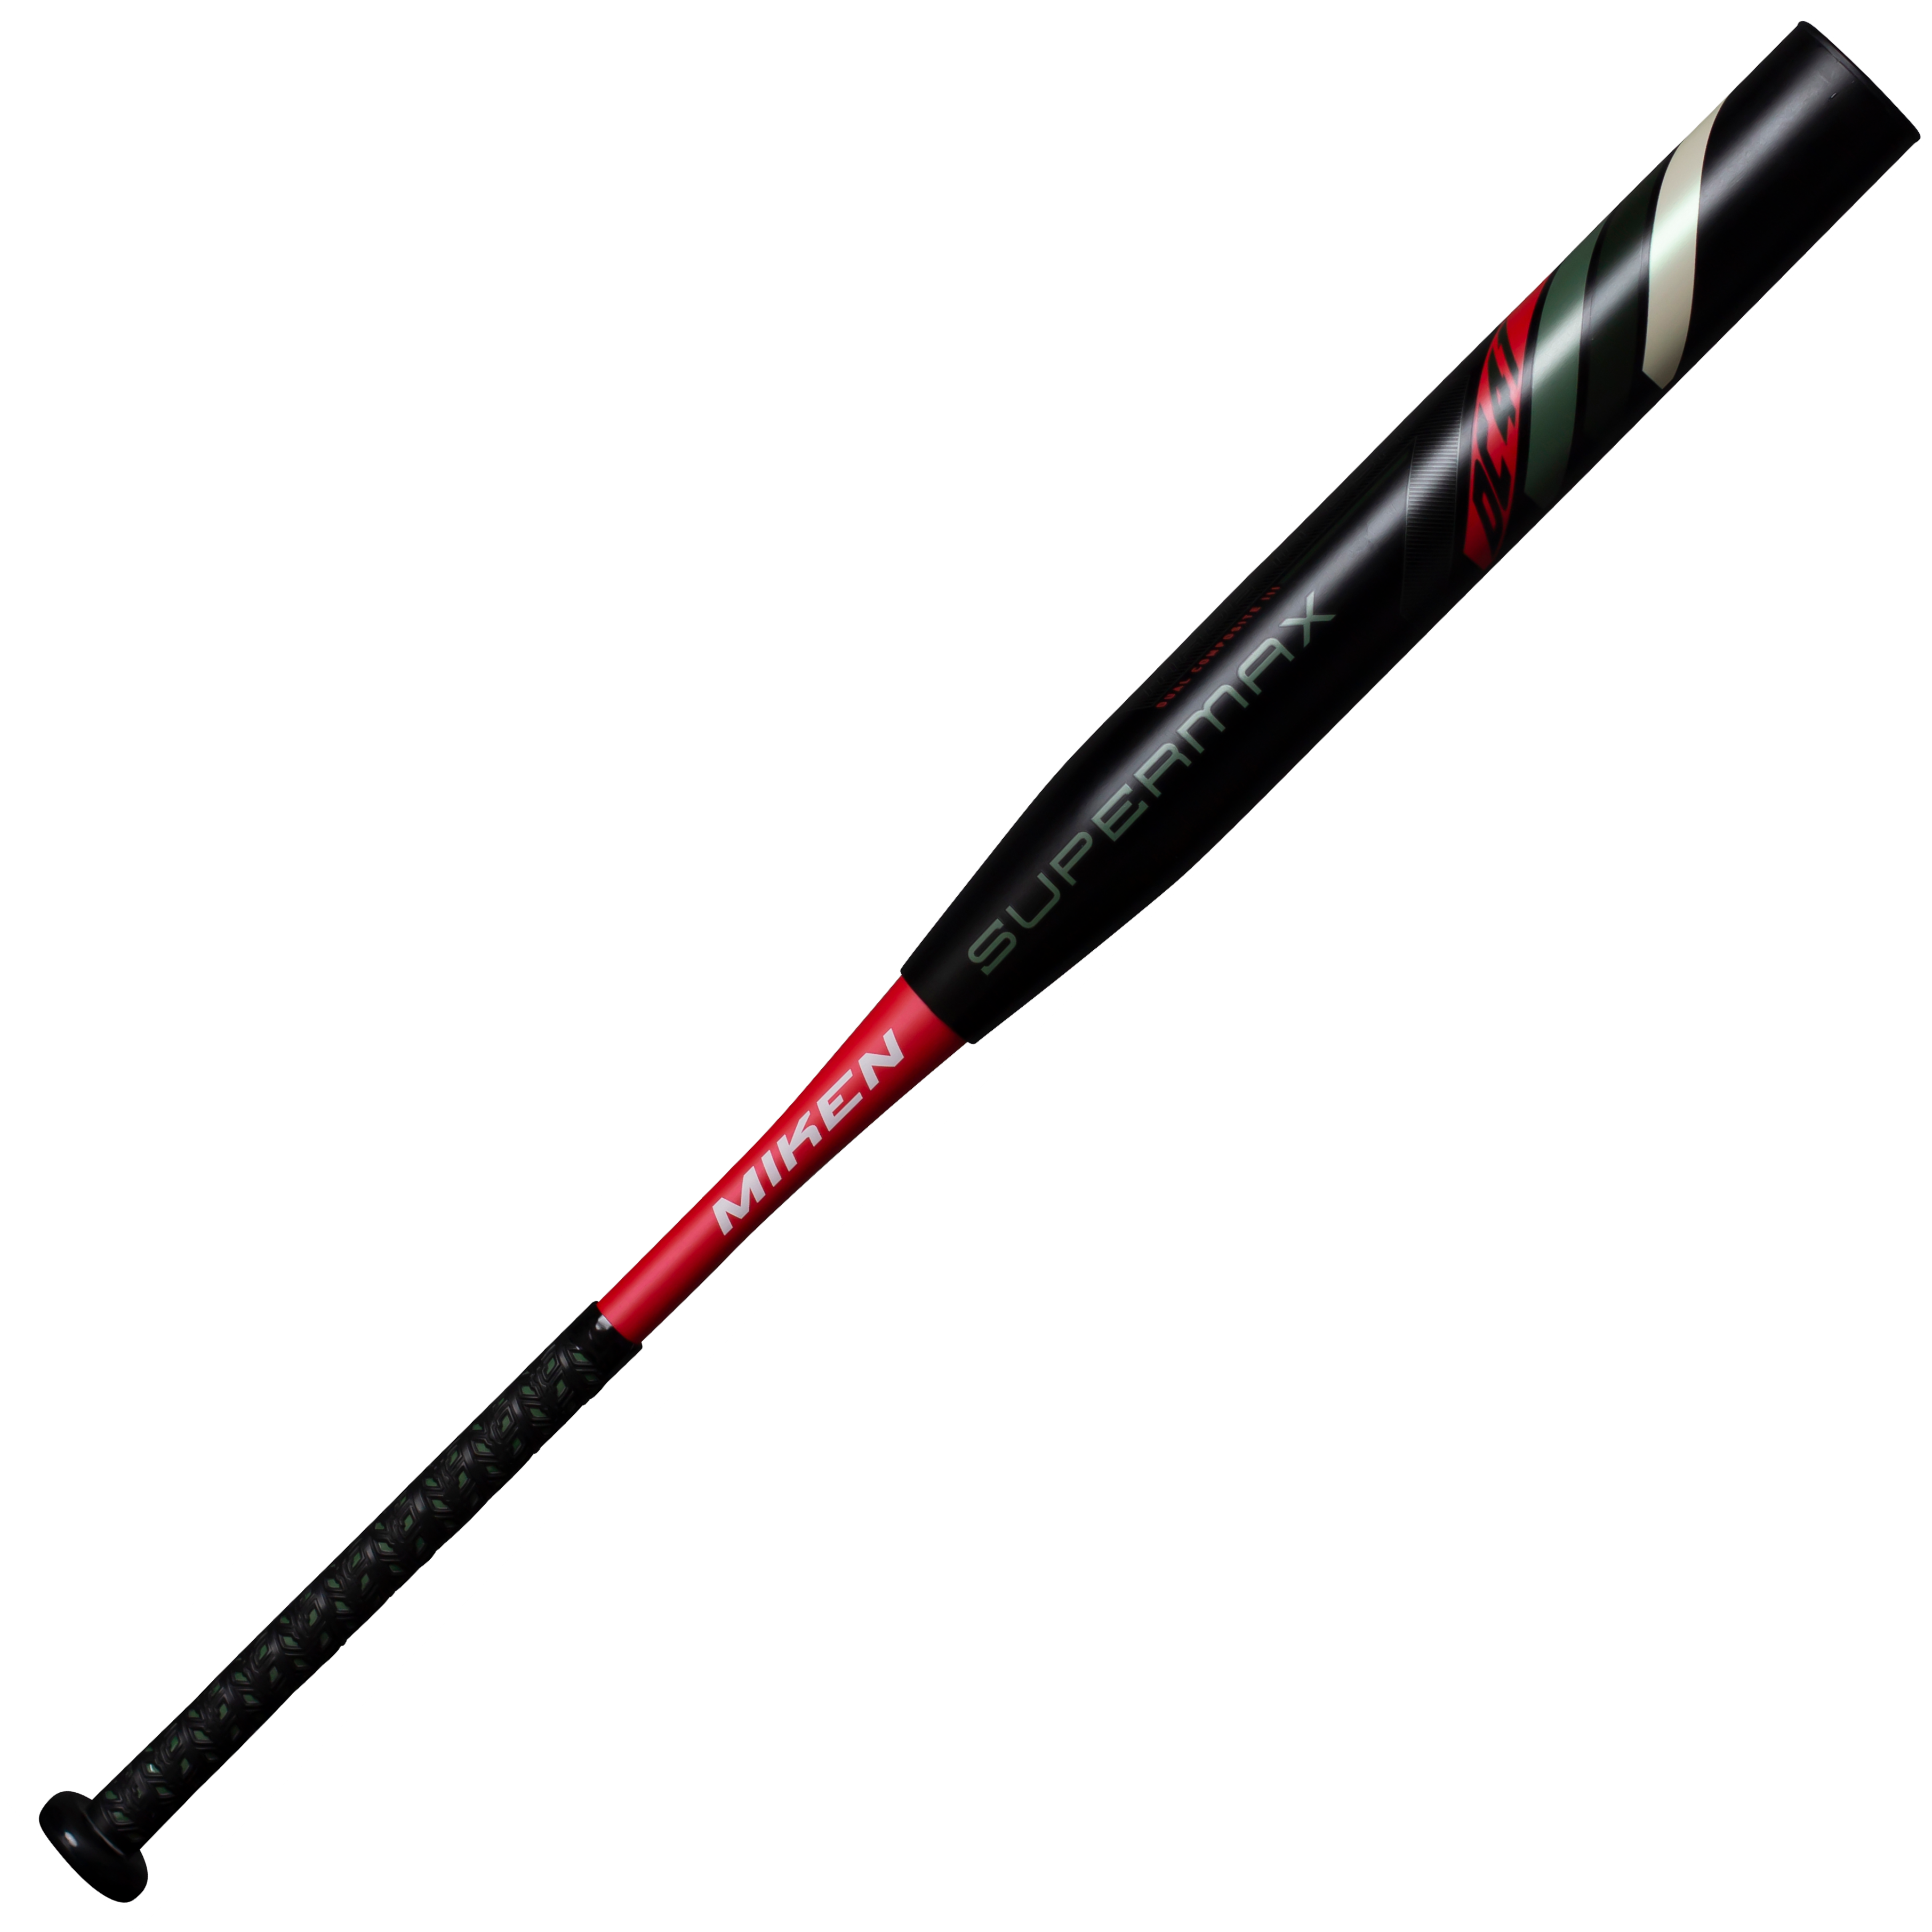 miken-2020-dc-41-14-inch-supermax-usssa-slow-pitch-softball-bat-34-inch-28-oz-black MDC20U-BLK-28 Miken            